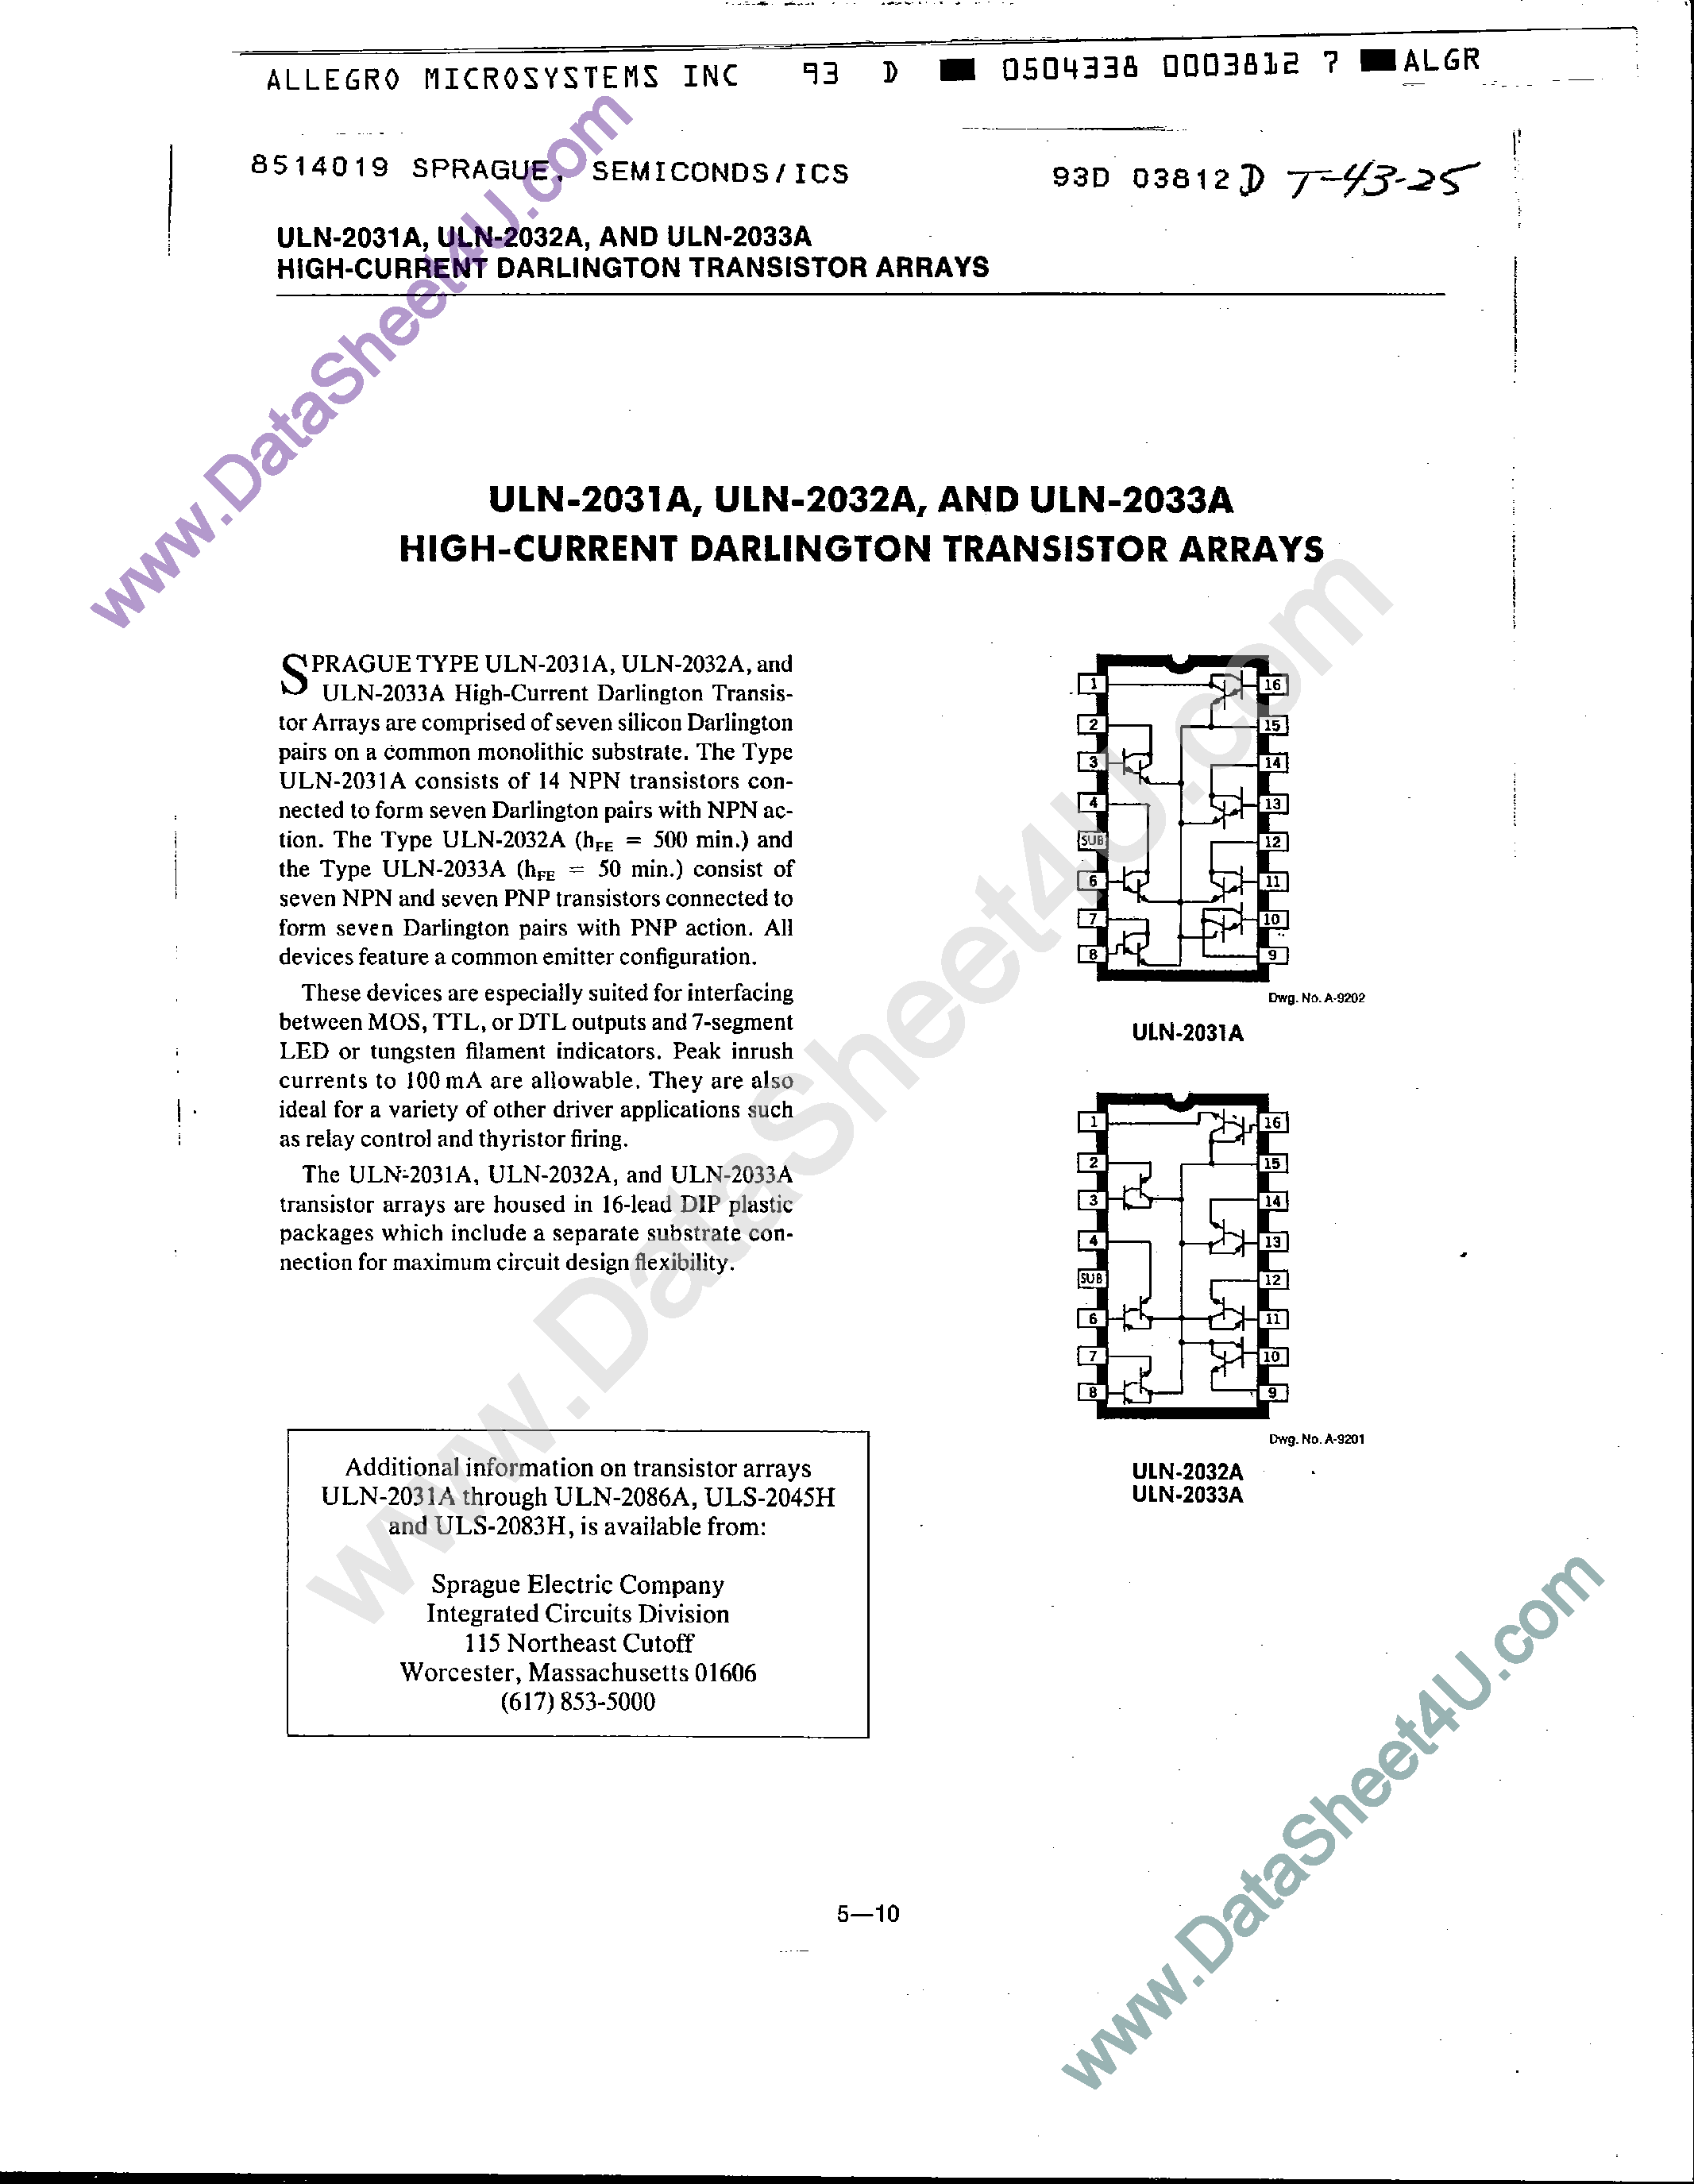 Datasheet ULN-2031A - (ULN2031A - ULN2033A) High Current Darlington Transistor Arrays page 1